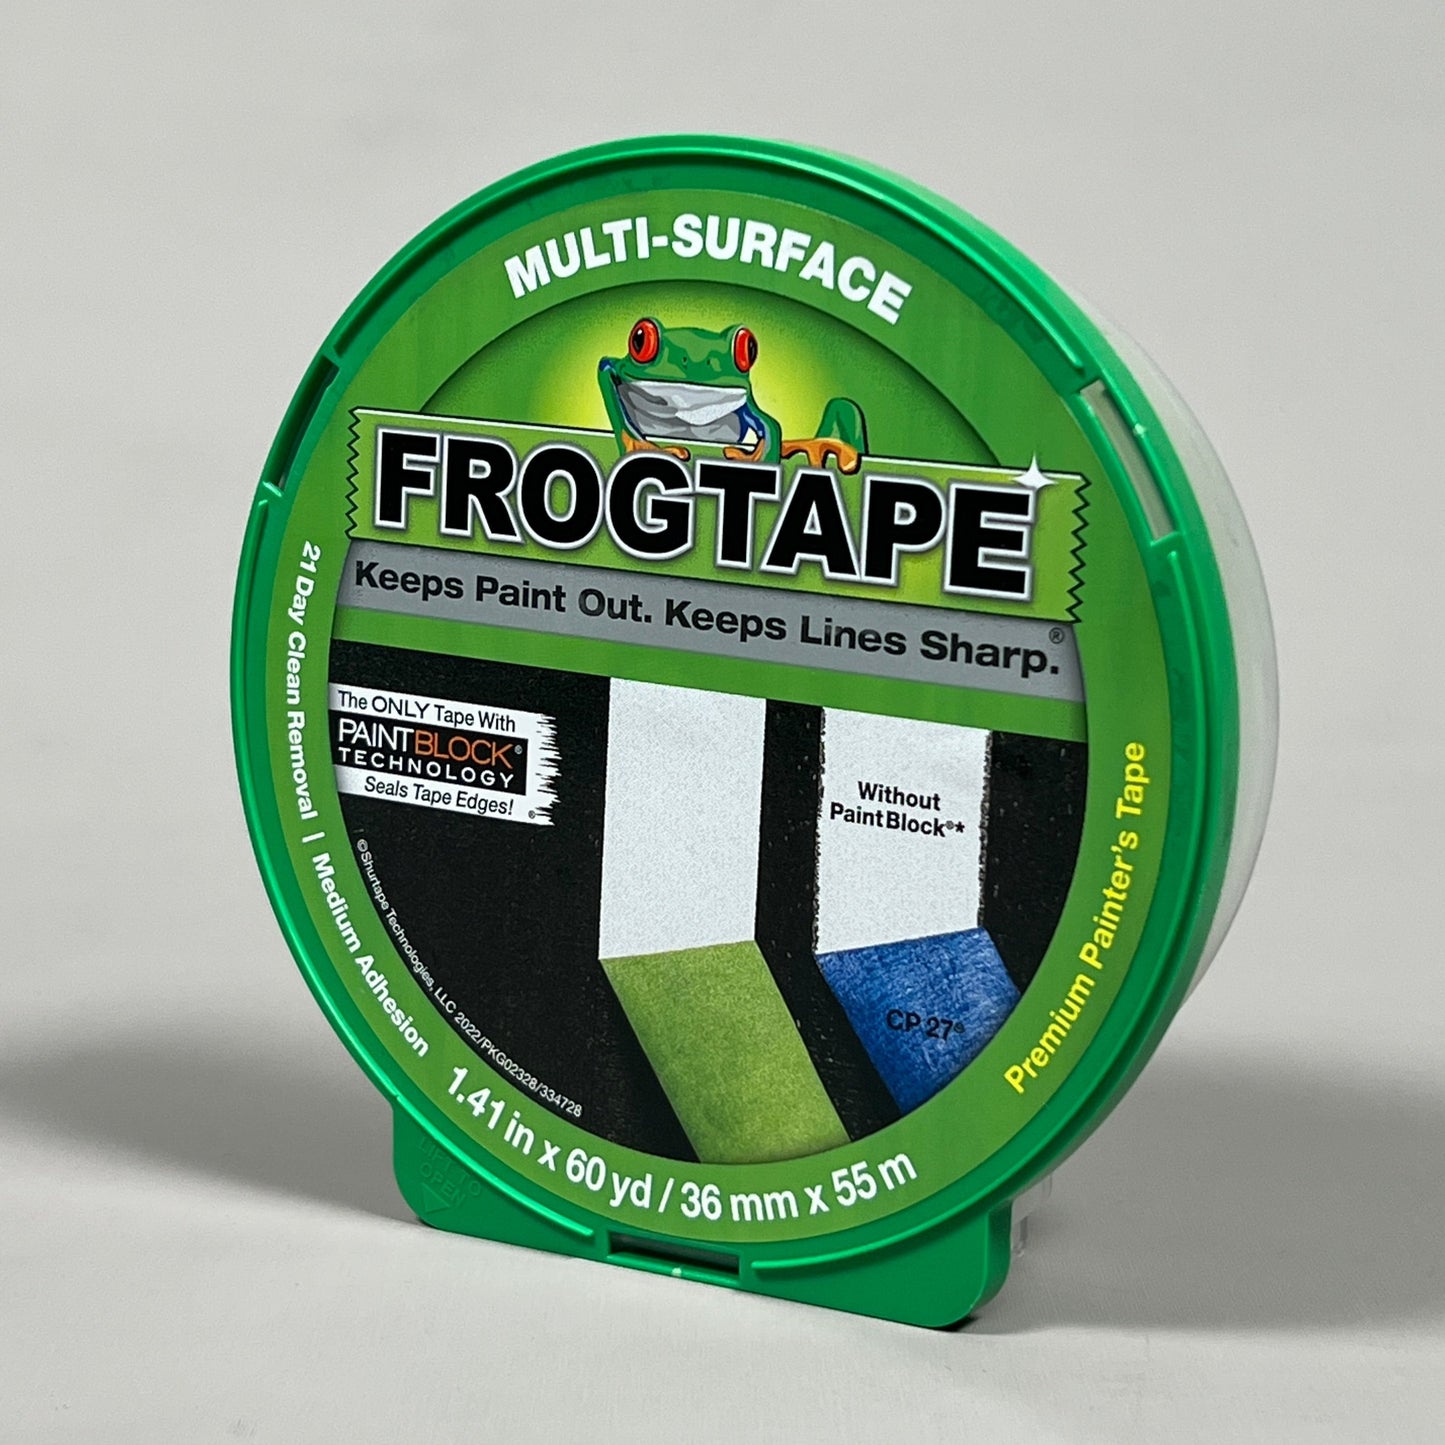 2-PK SHURTAPE FROGTAPE Multi-Surface Masking Tape Green 1.41 in x 60 yd 1396747 (New)